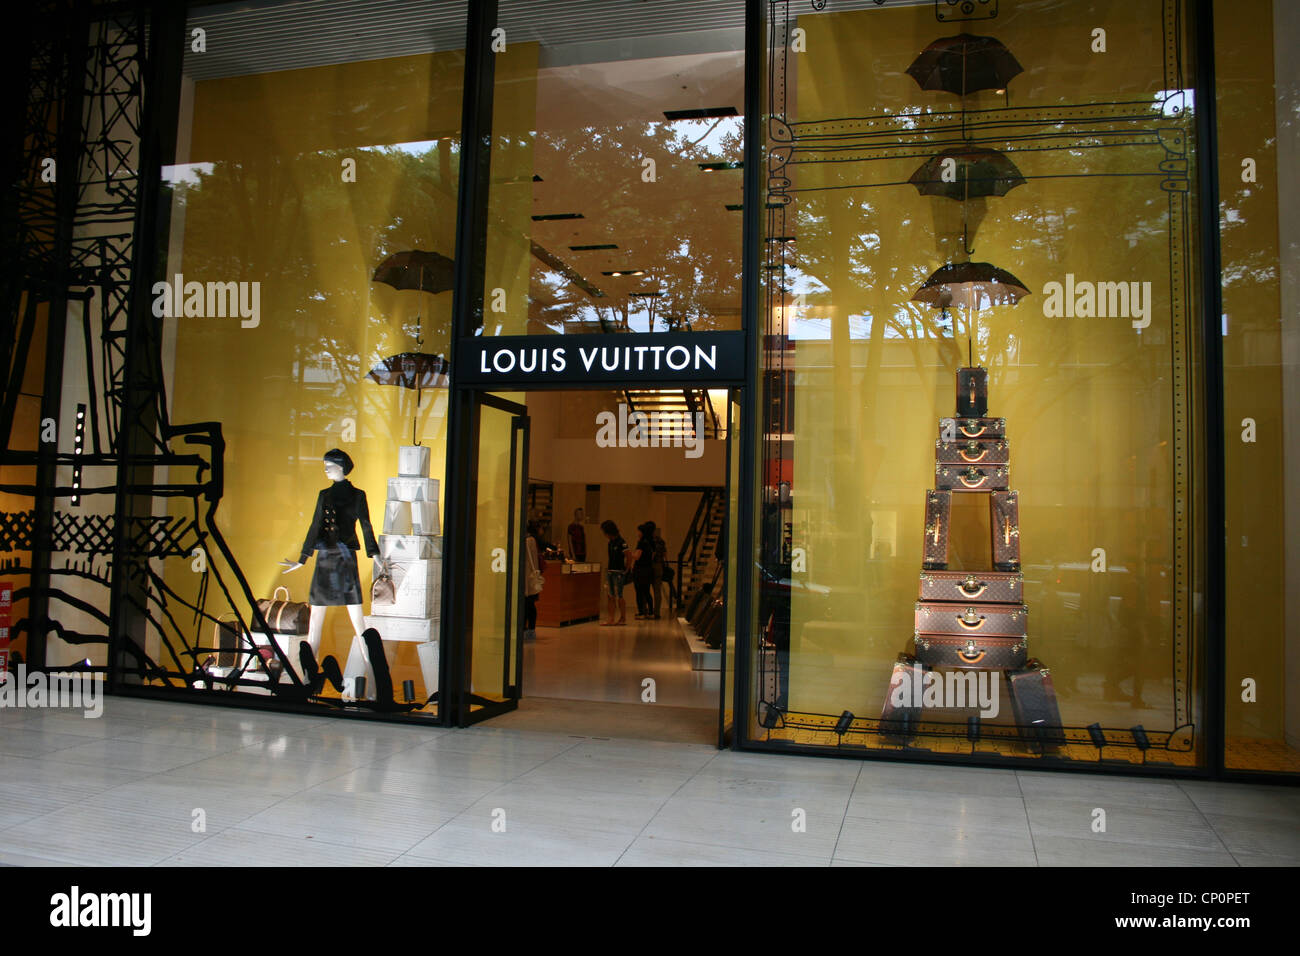 Exterior of Louis Vuitton shop in Tokyo, Japan Stock Photo - Alamy